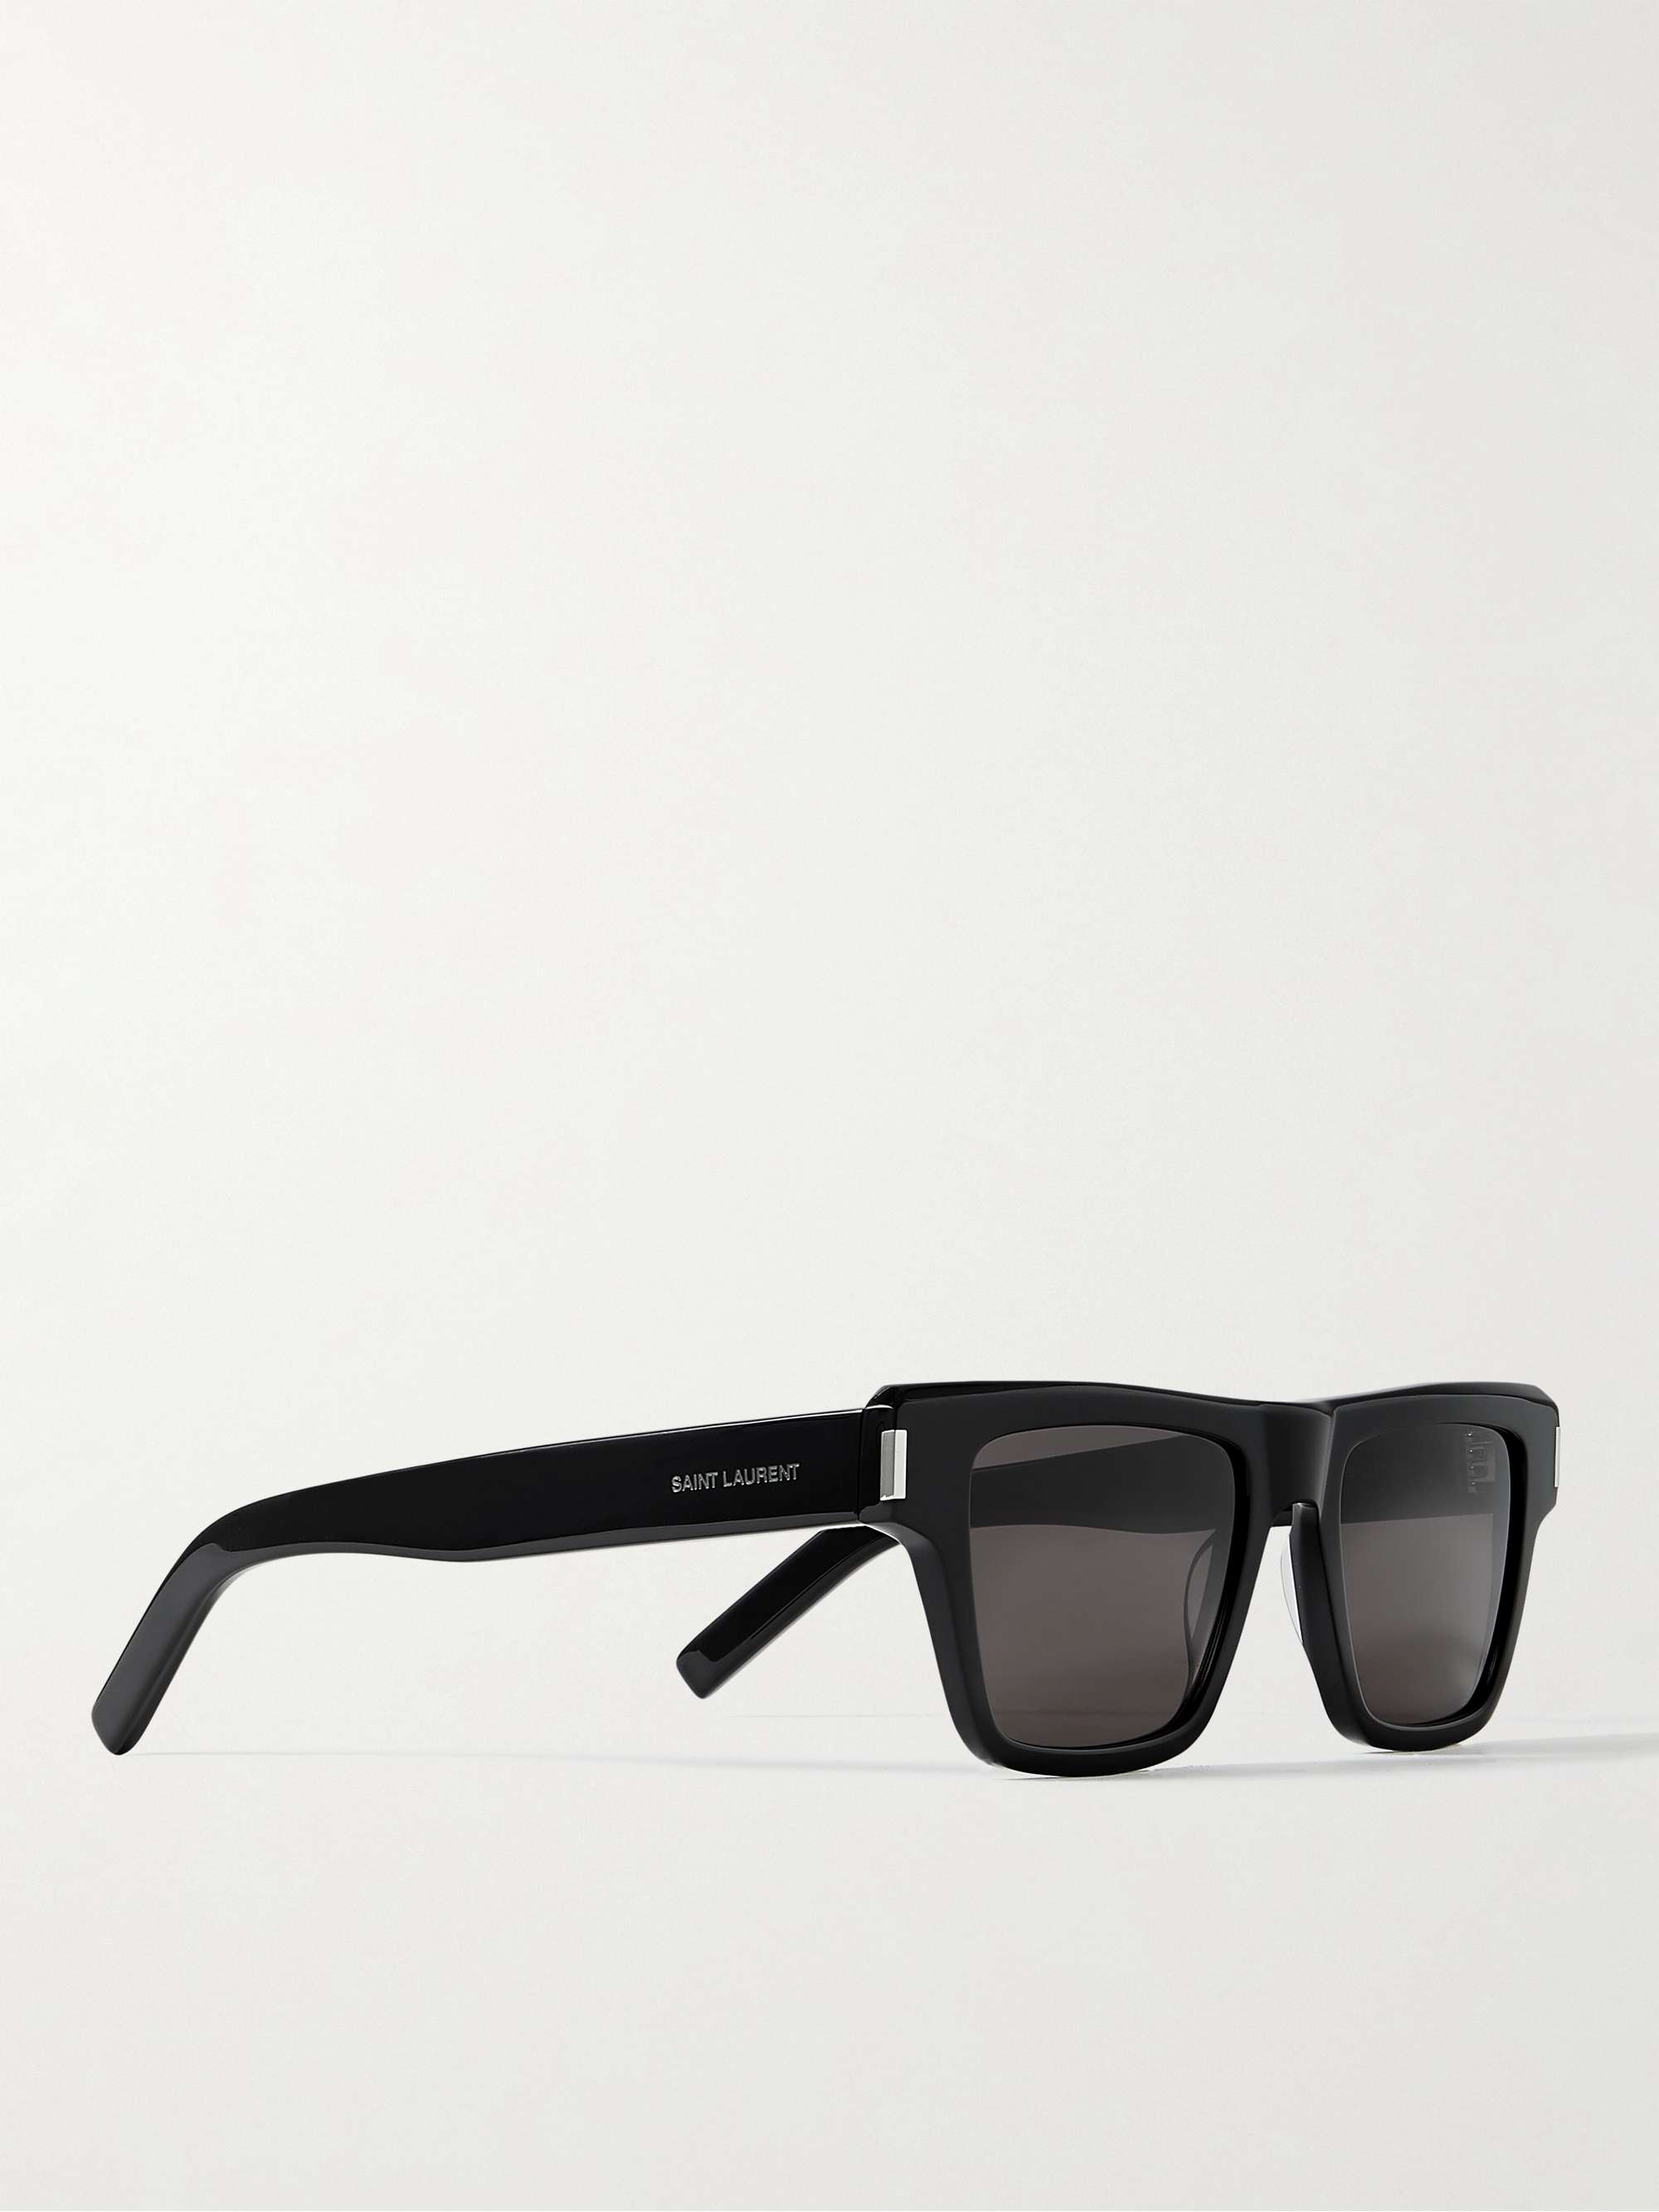 SAINT LAURENT EYEWEAR New Wave Square-Frame Sunglasses for Men | MR